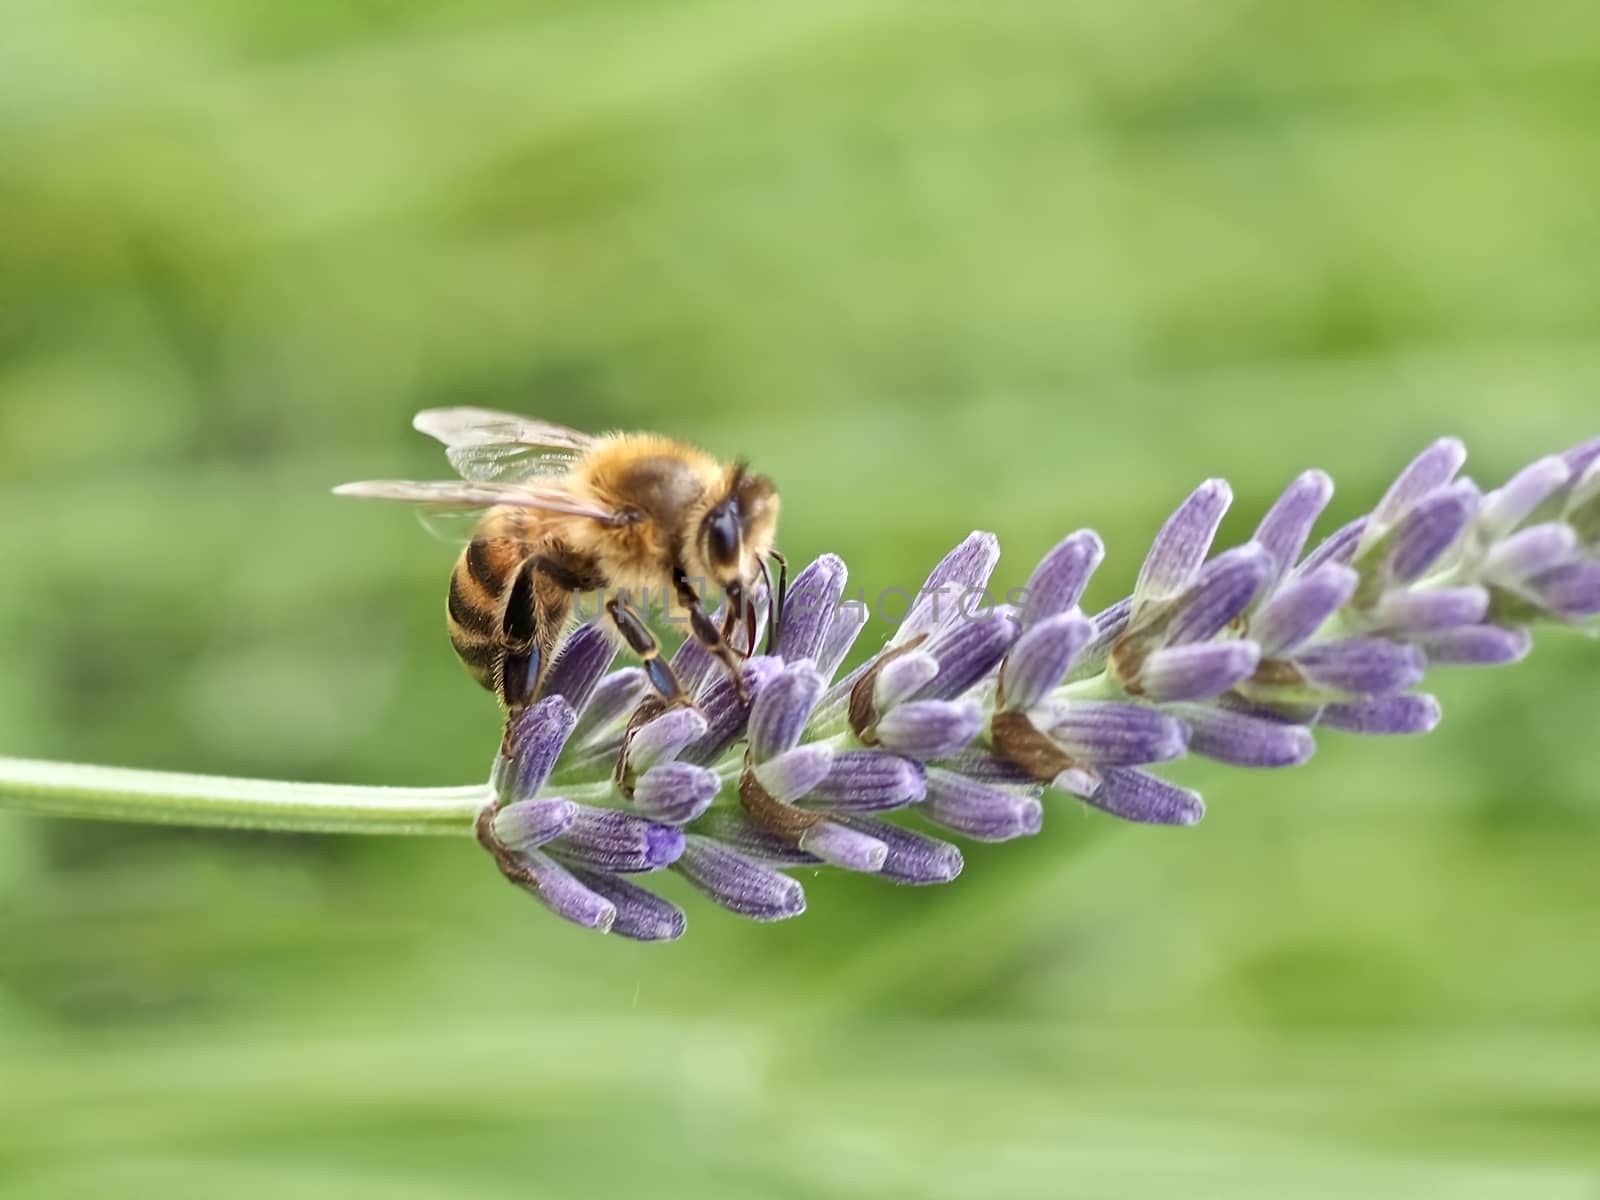 Closeup of a honey bee on a purple lavender flower by Stimmungsbilder